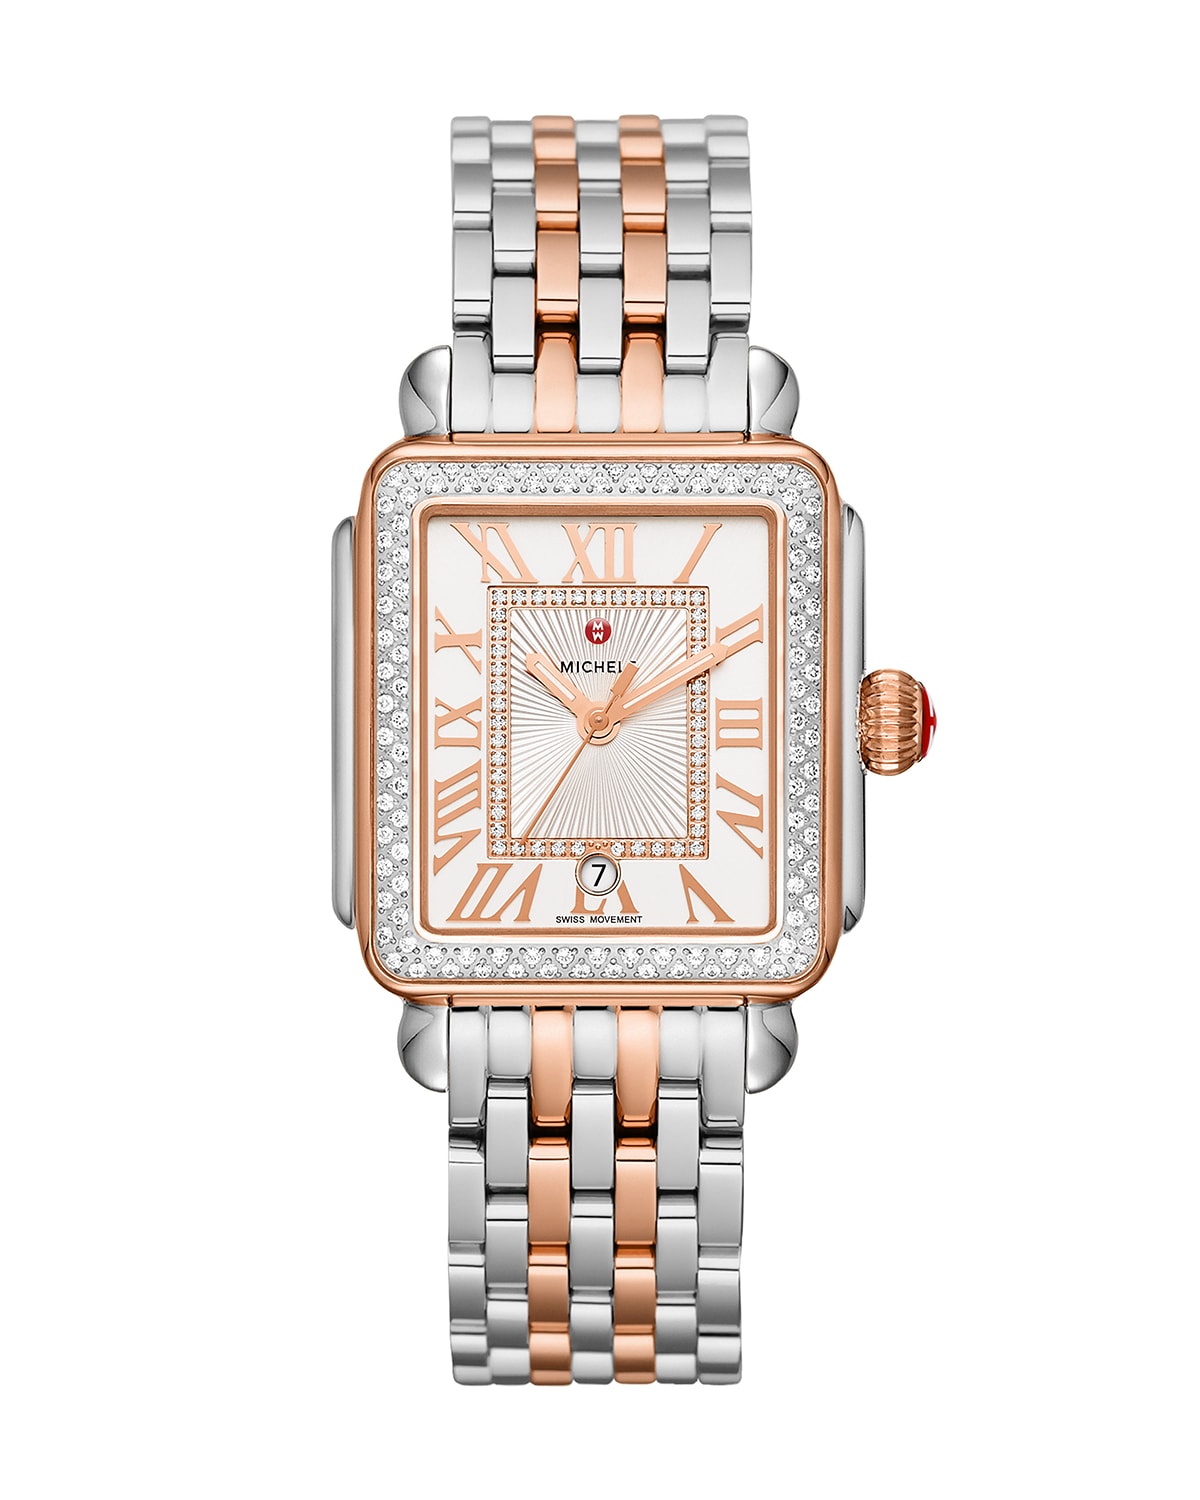 Michele Deco Madison Two-tone 18k Pink Gold Diamond Watch